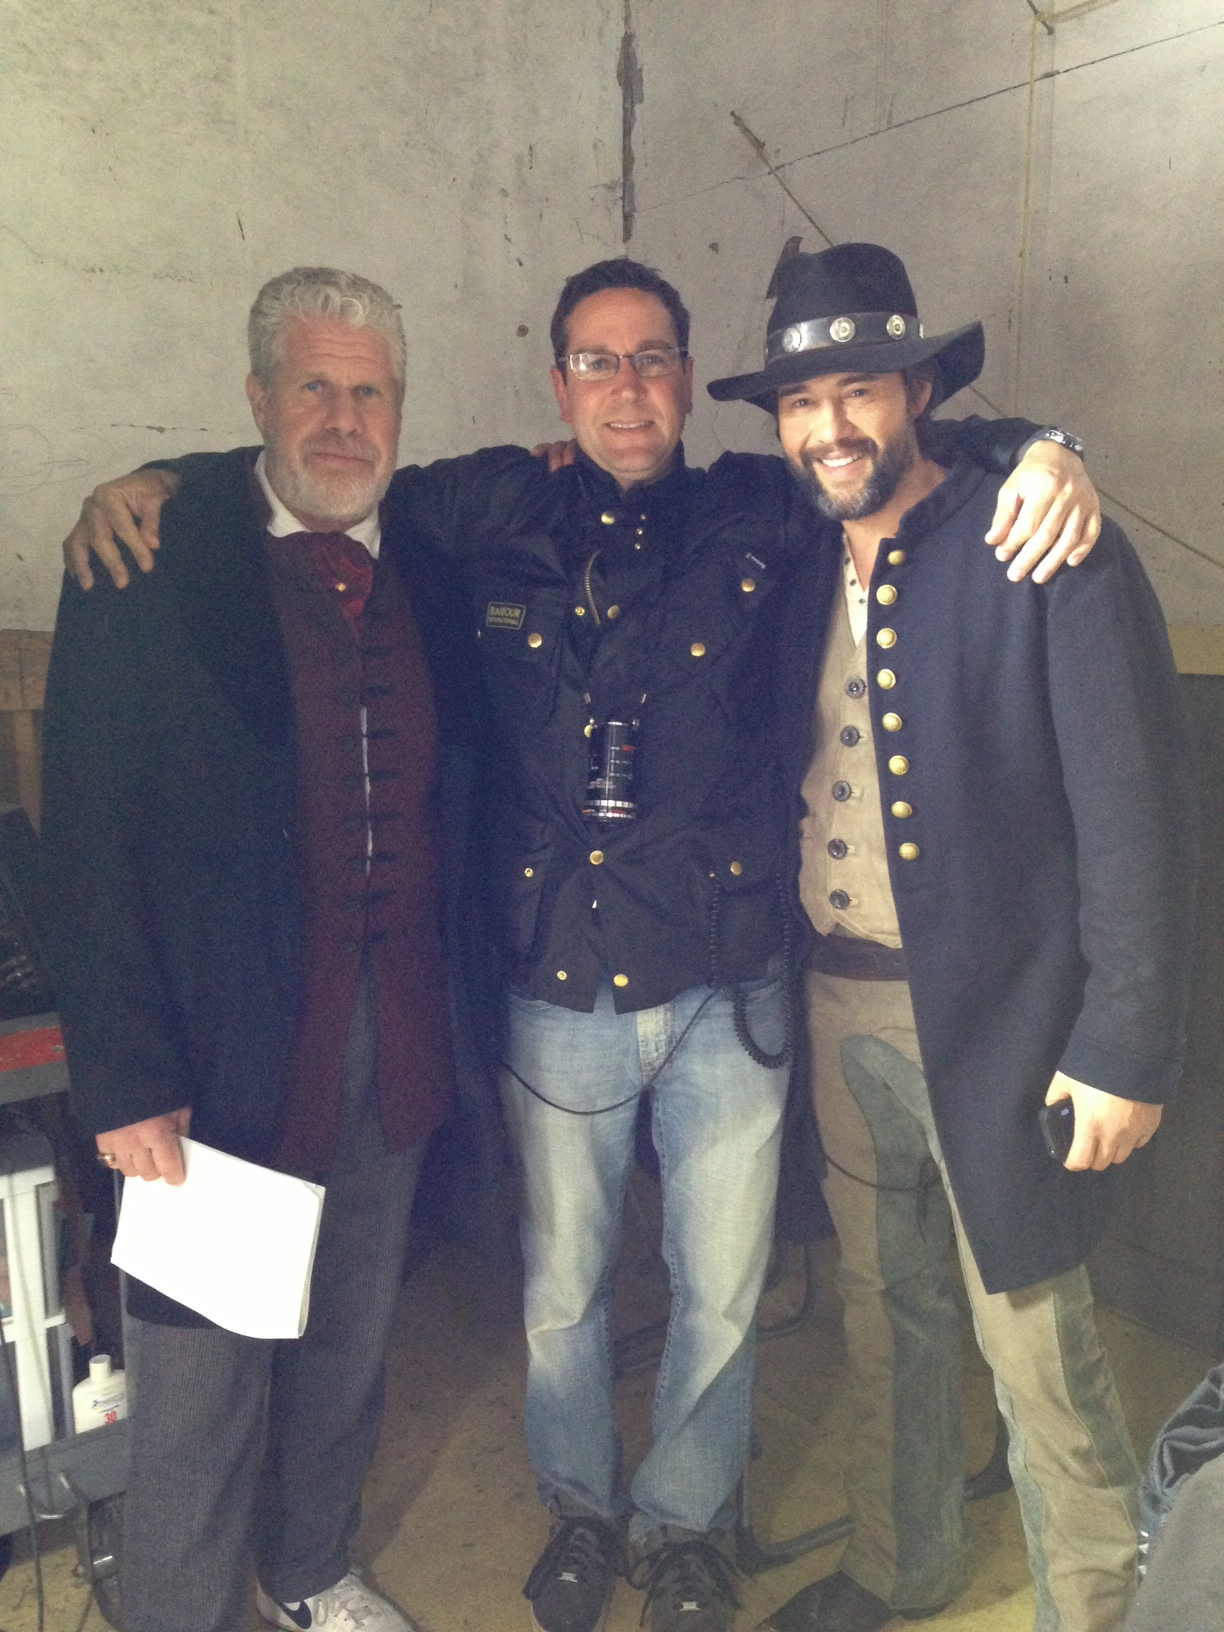 Thomas Makowski with Ron Perlman and Steve Bacic on the set of 